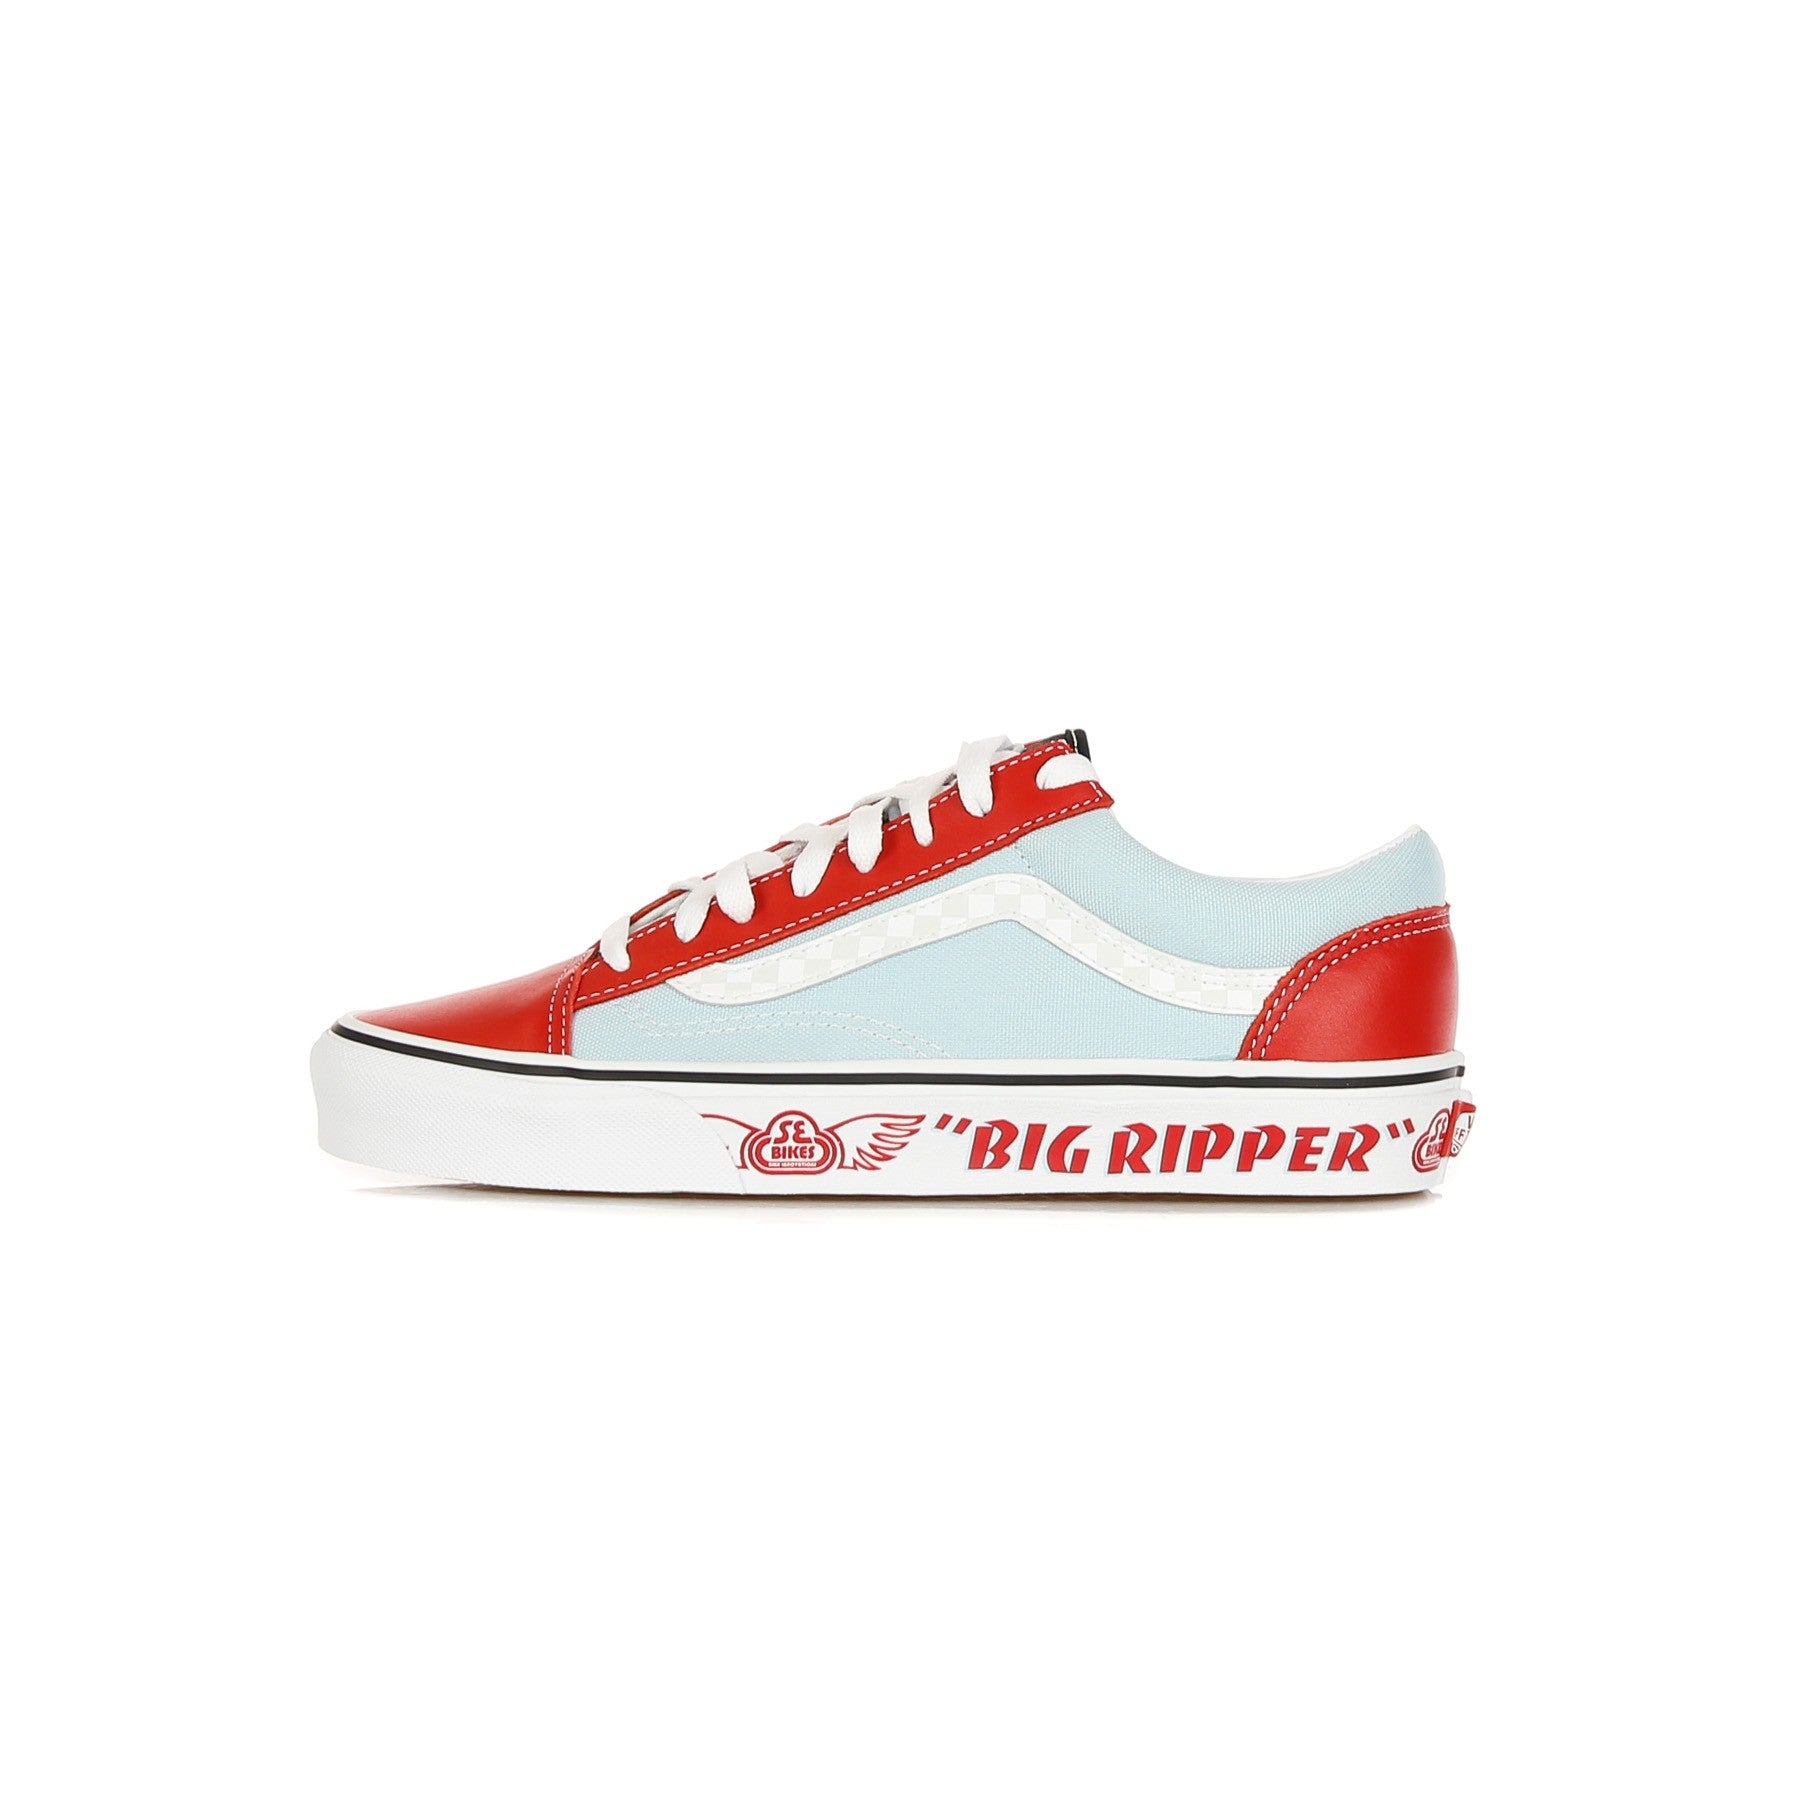 Low Men's Shoe Style 36 (se Bikes) Big Ripper Red/plume/reflective